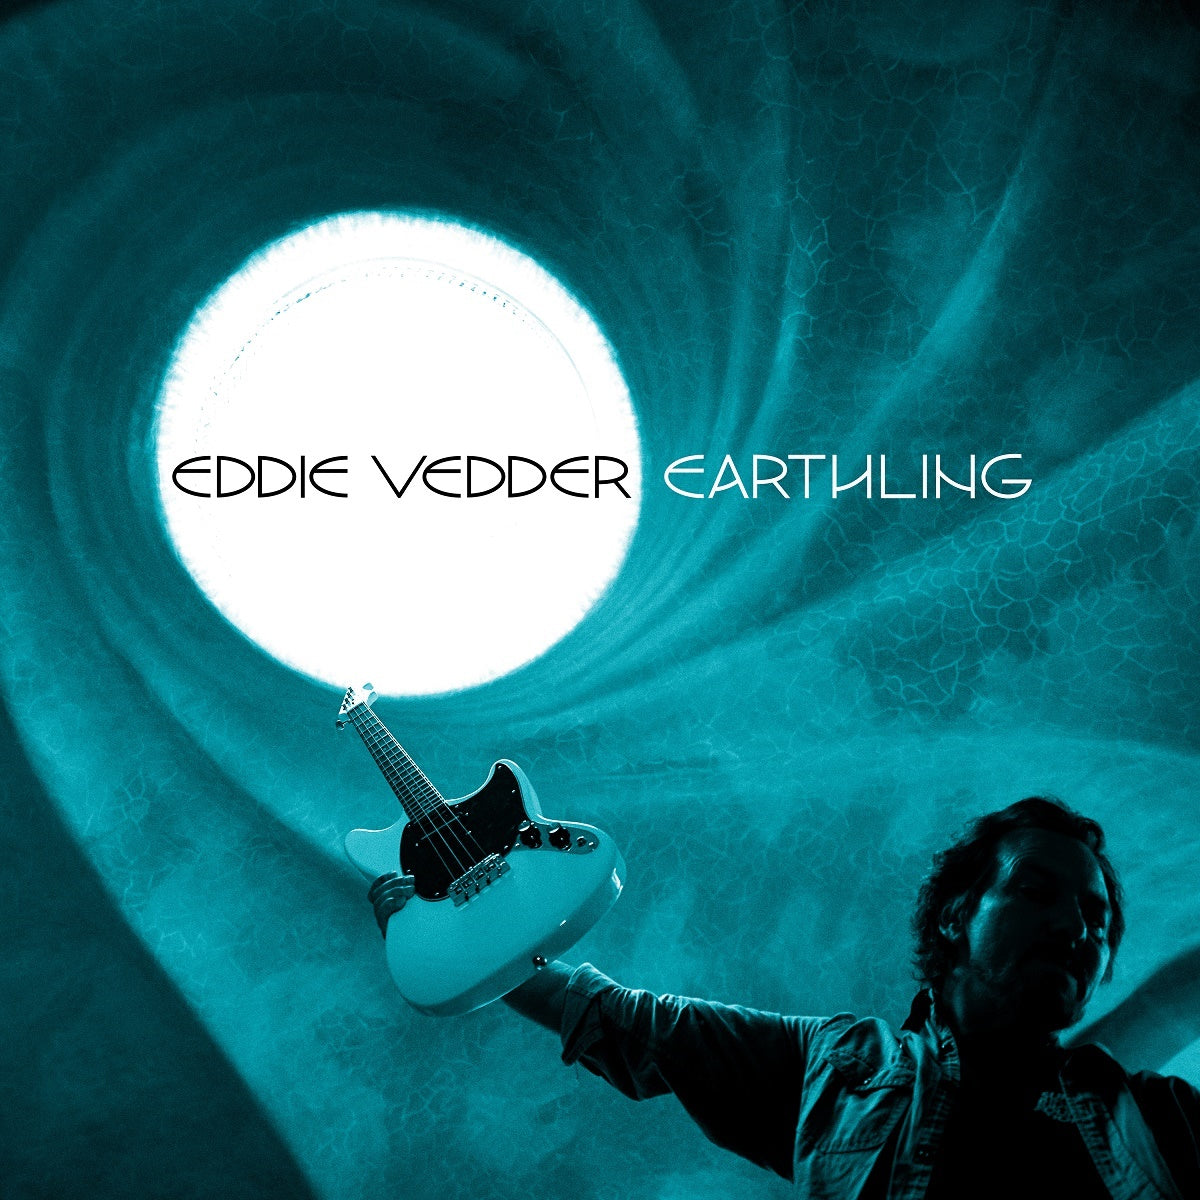 Eddie Vedder | Earthling [Explicit Content] Clear Vinyl, Blue, Black, Gatefold LP Jacket) | Vinyl - 0